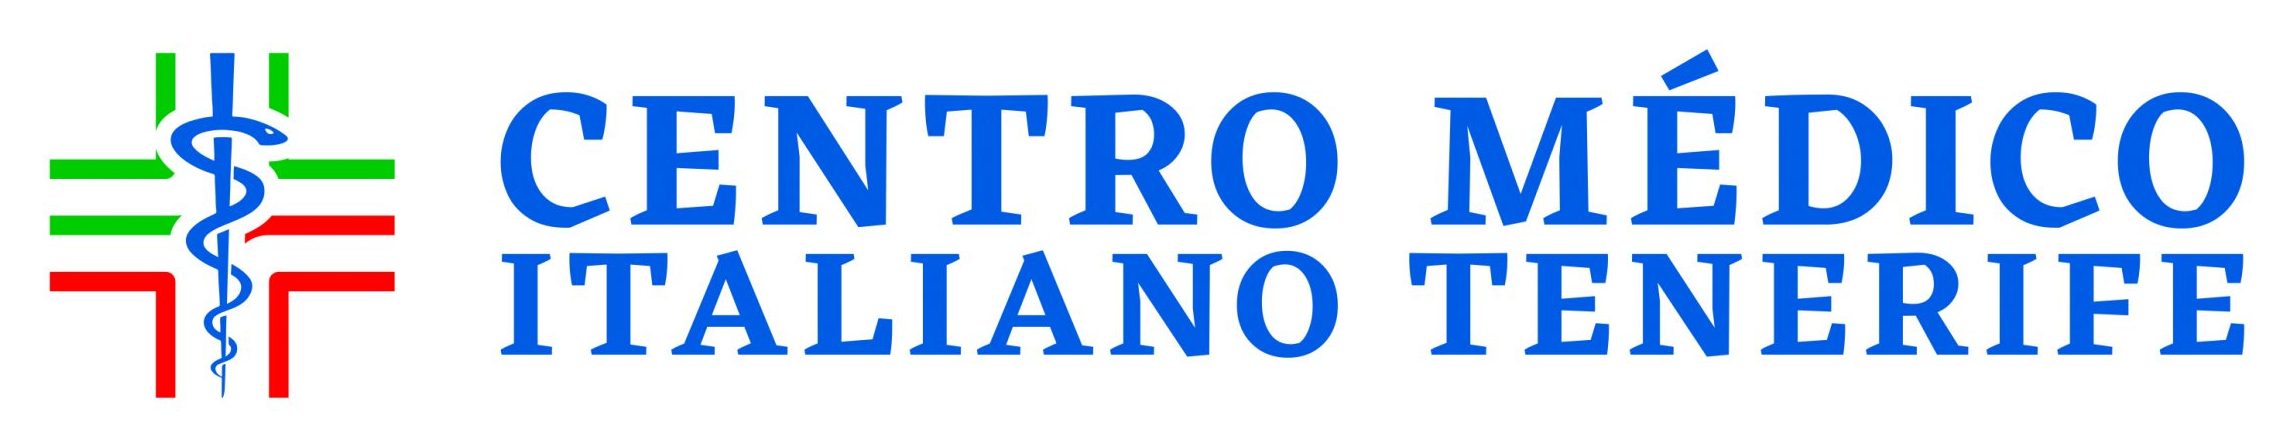 CENTRO MEDICO ITALIANO TENERIFE